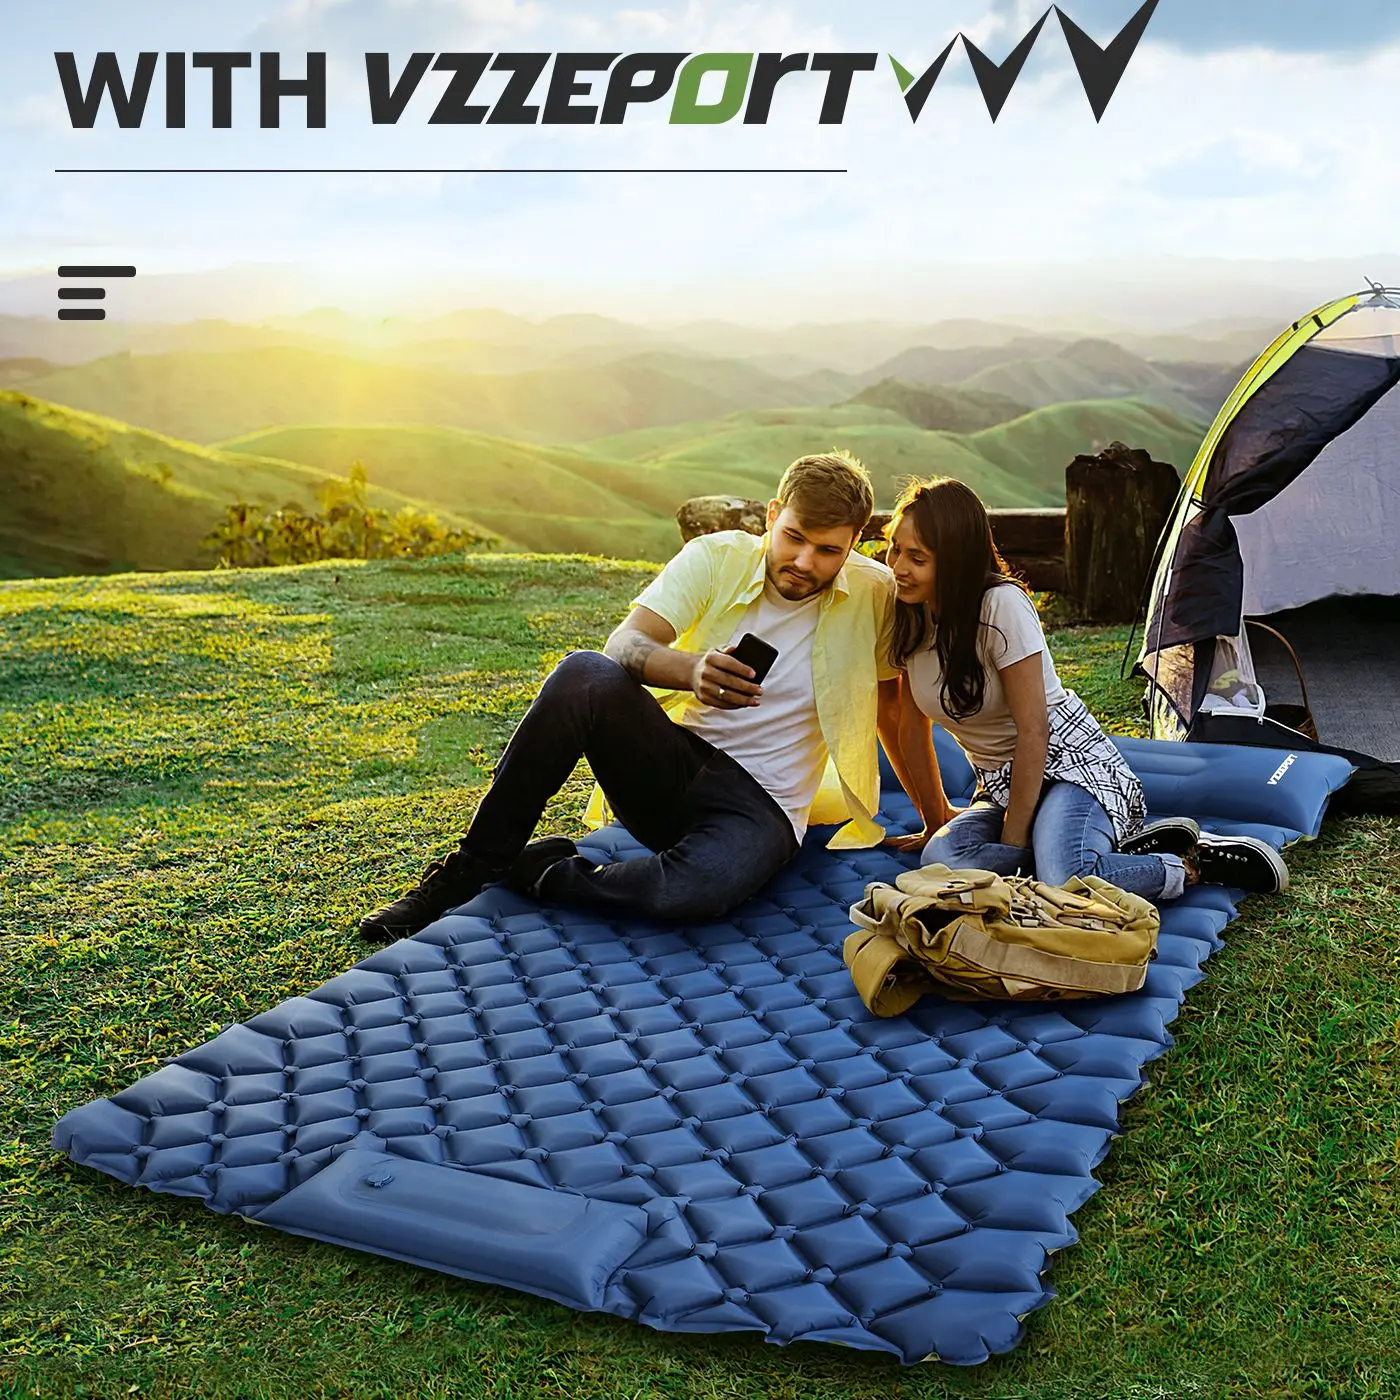 2022 New Camping Sleeping Pad Mat Ultralight Inflatable mattress in Tent Hiking Trekking Portable Travel Folding bed Air pad